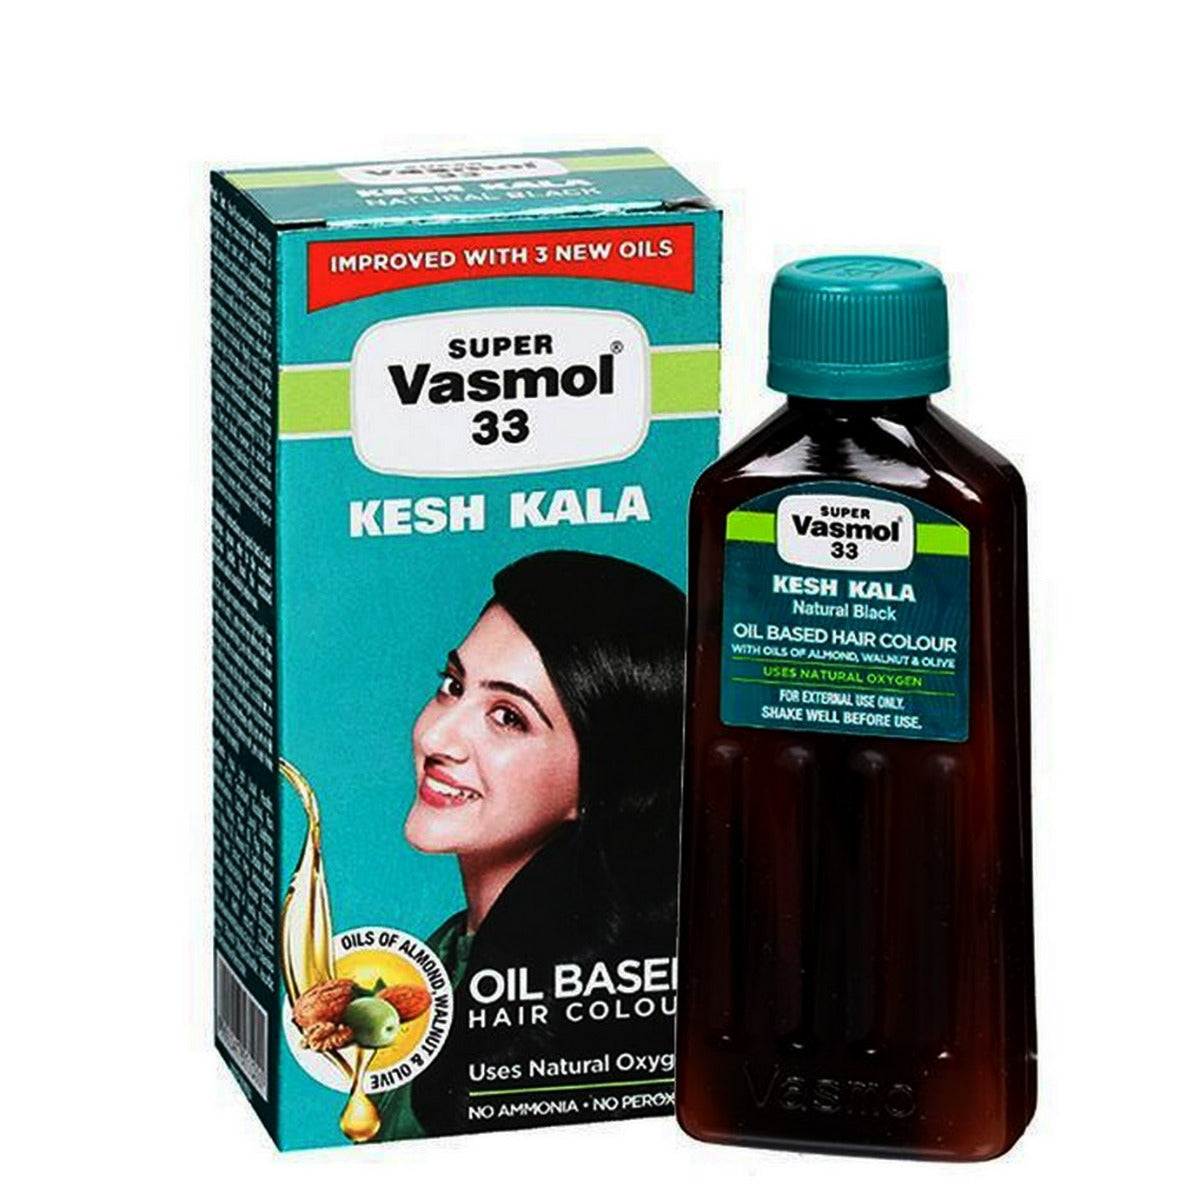 Super Vasmol 33 Kesh Kala Oil Based Hair Colour